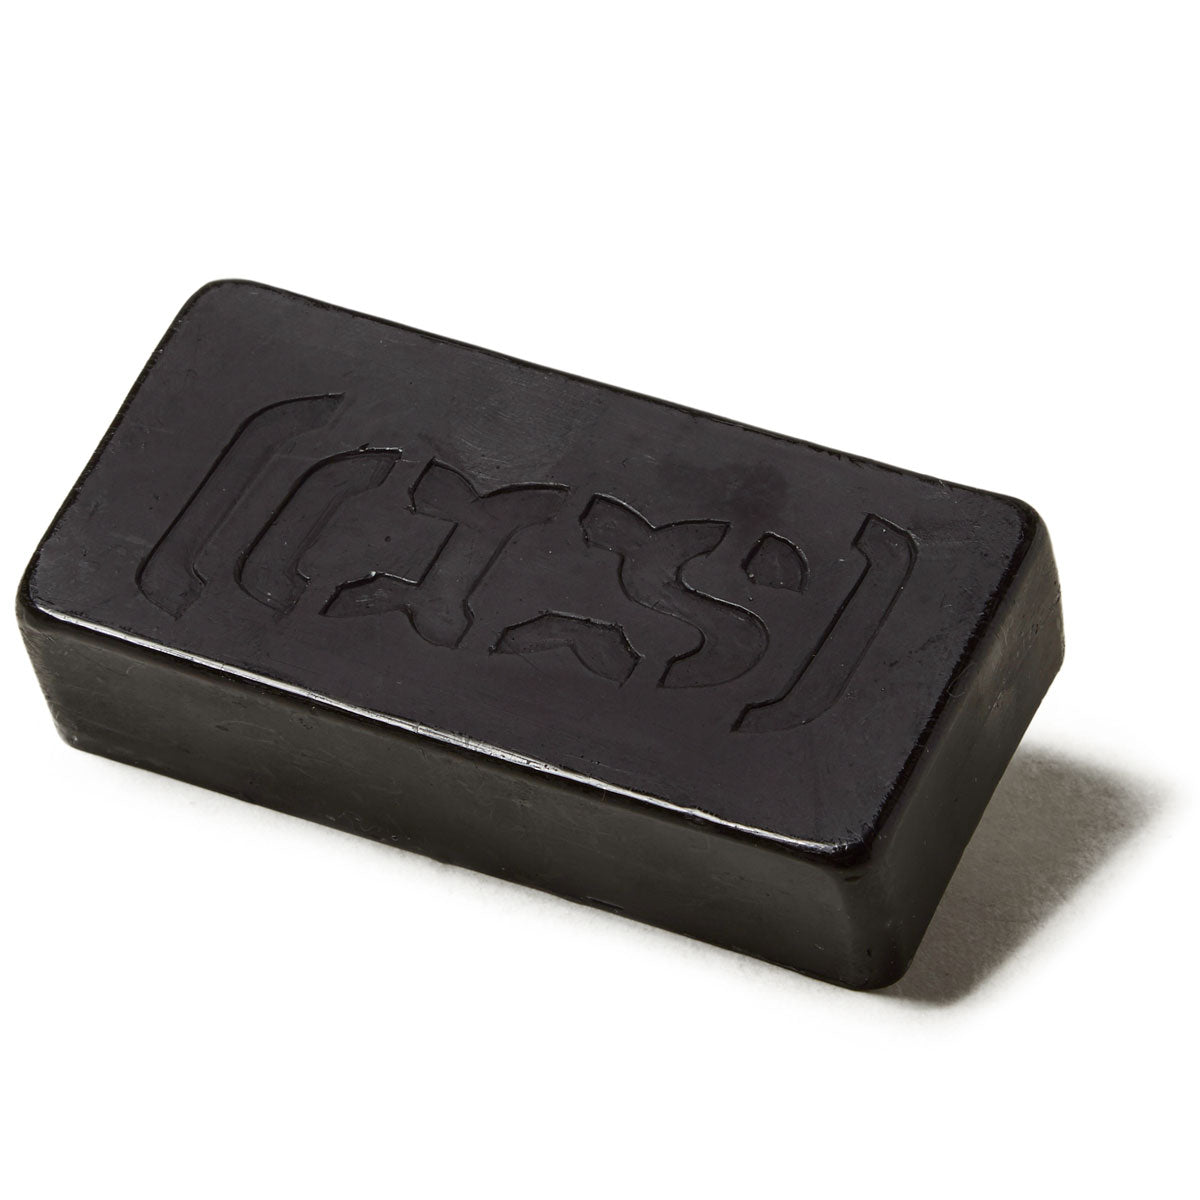 Shorty's Curb Candy WAX-IN-A-BOX Skate Wax – CCS